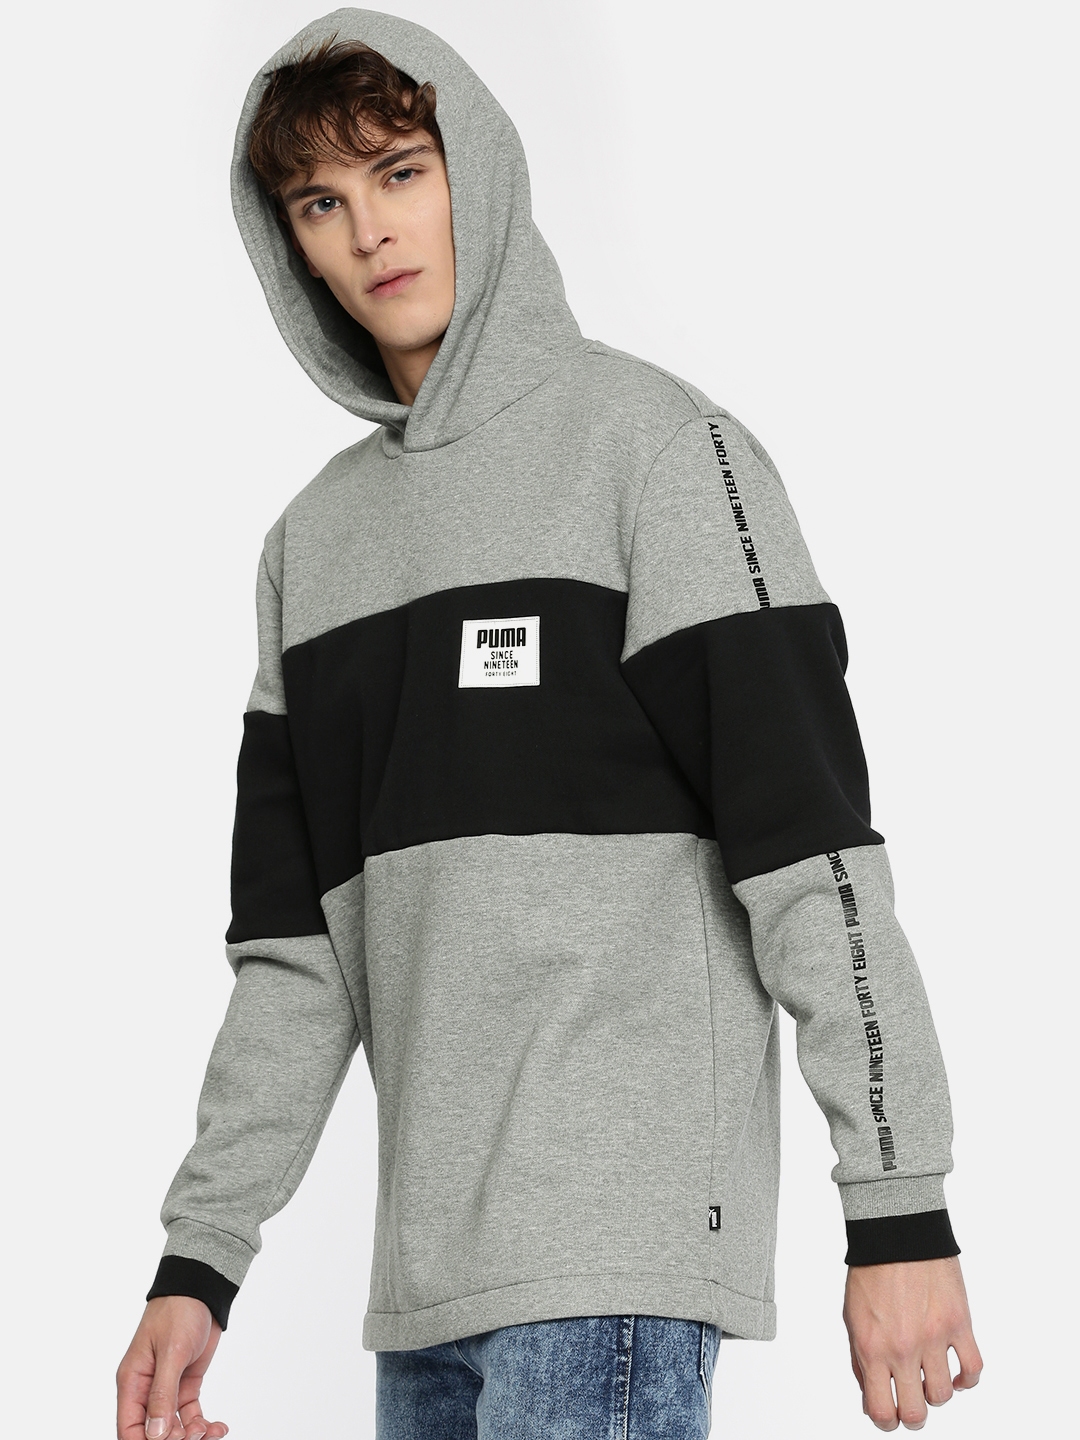 grey and black puma hoodie